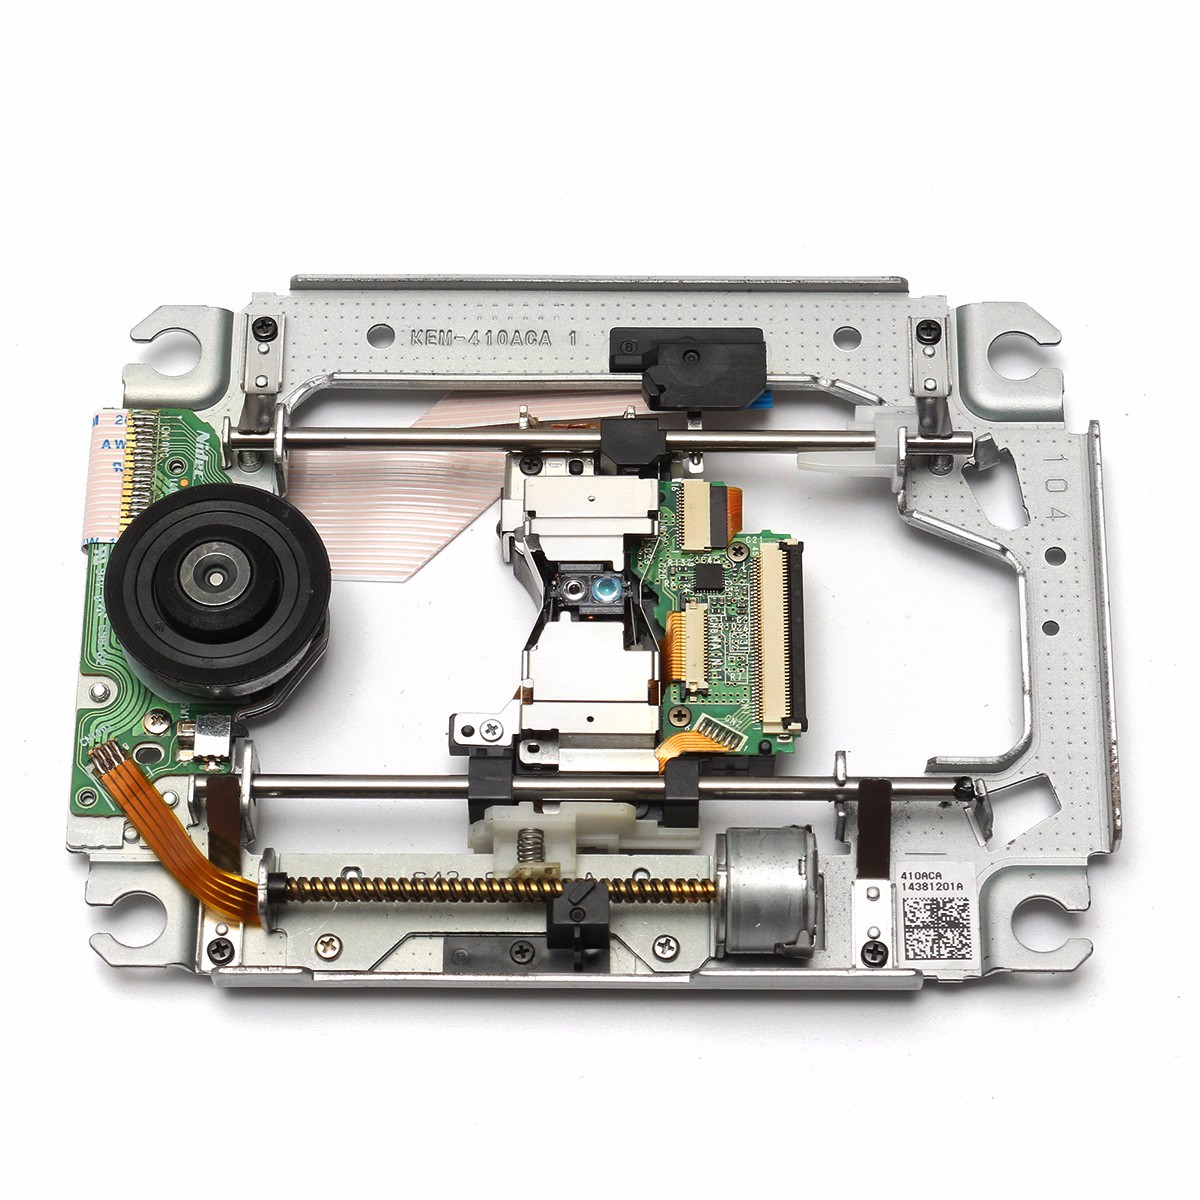 

KES-410ACA/410A KEM-410ACA Laser Lens & Deck for Play Station 3 for PS3 Parts